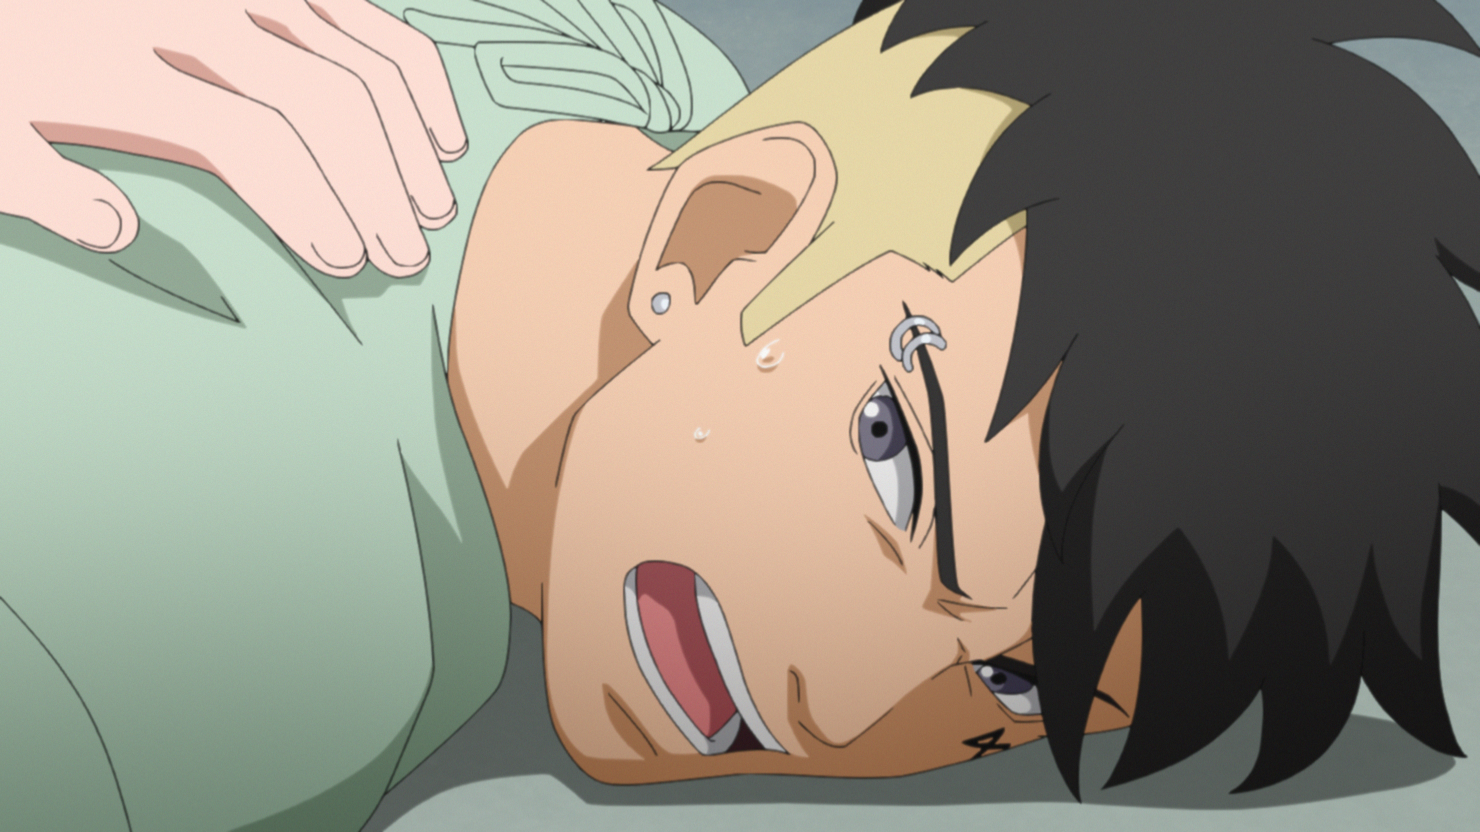 Boruto: Naruto Next Generations - Volume 11: Episode 190-205 [Blu-ray] Image 5